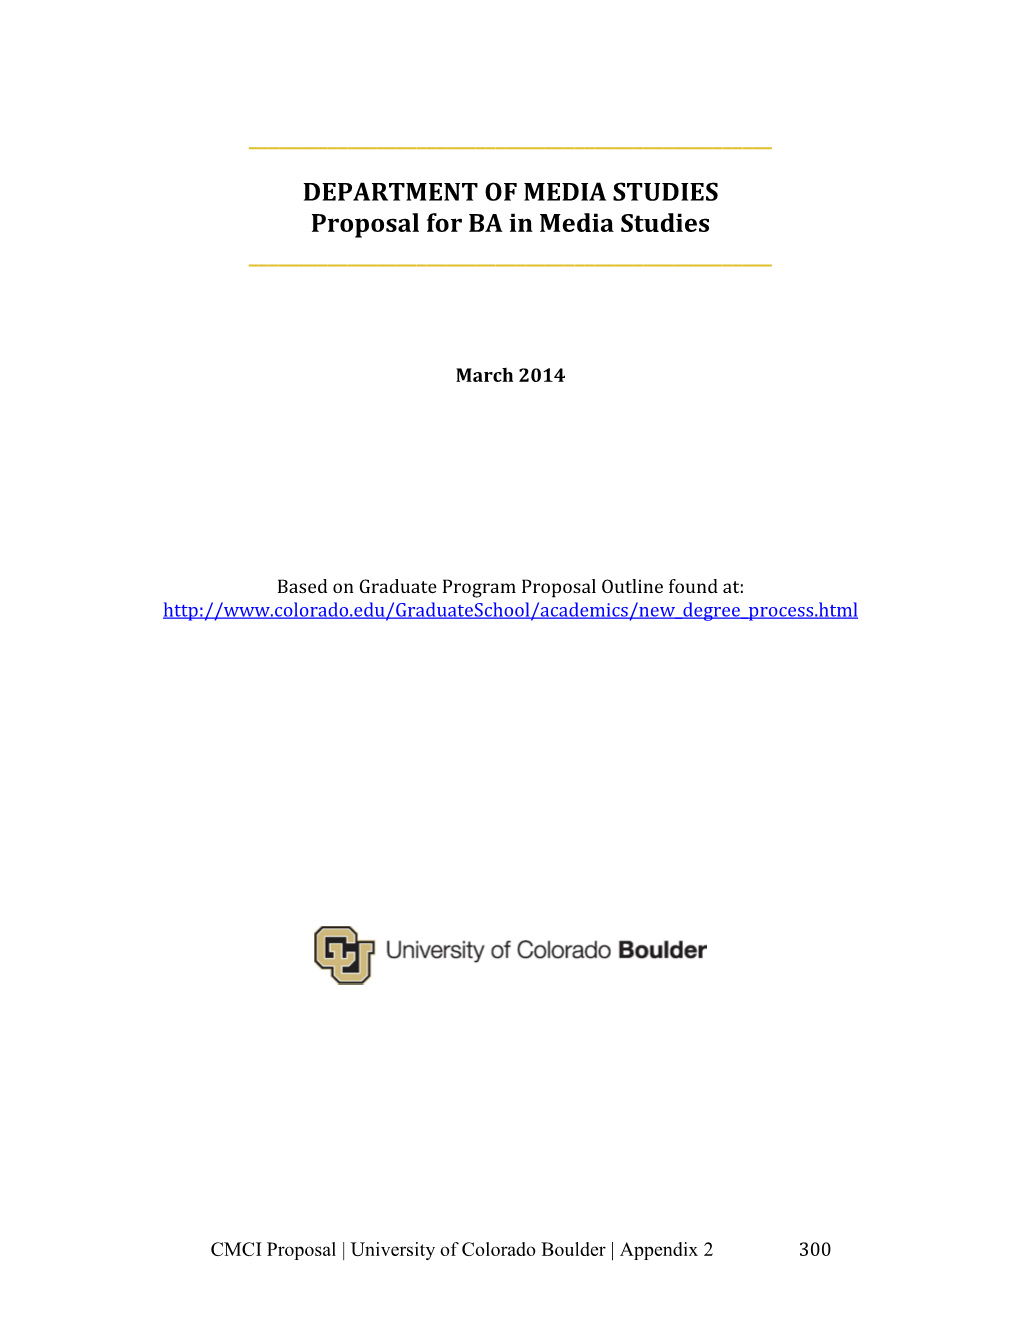 DEPARTMENT of MEDIA STUDIES Proposal for BA in Media Studies ______